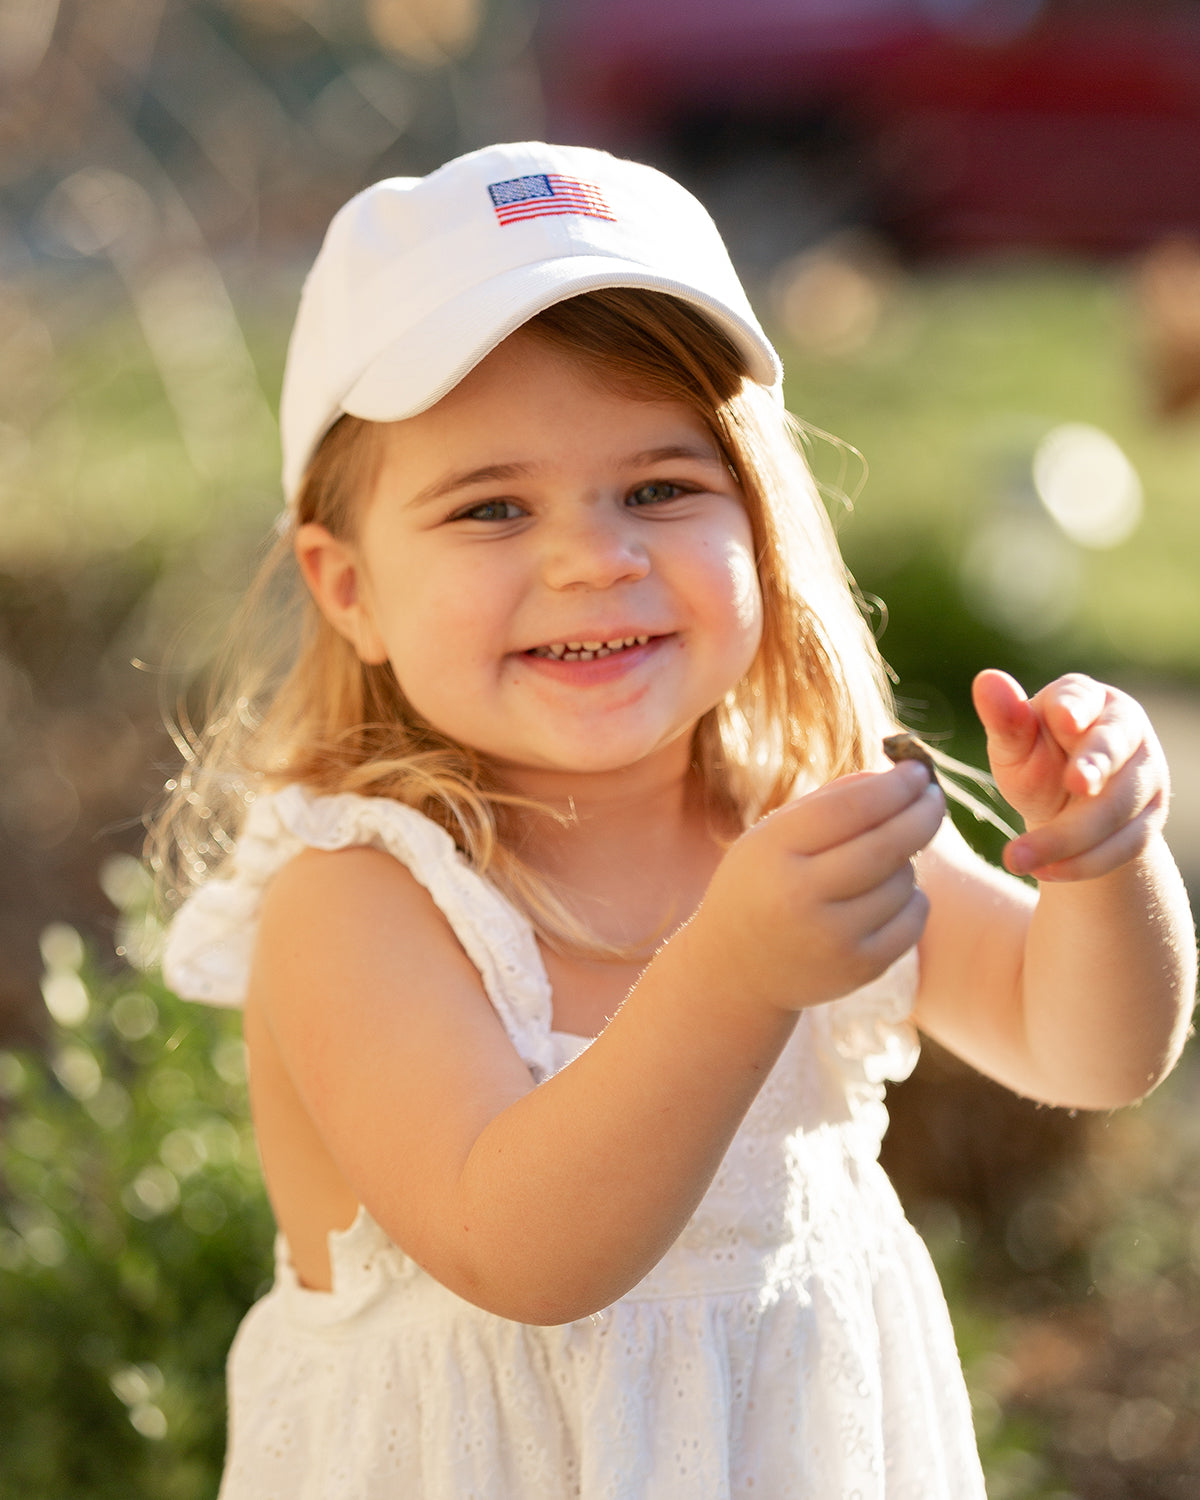 American Flag Bow Baseball Hat (Baby)